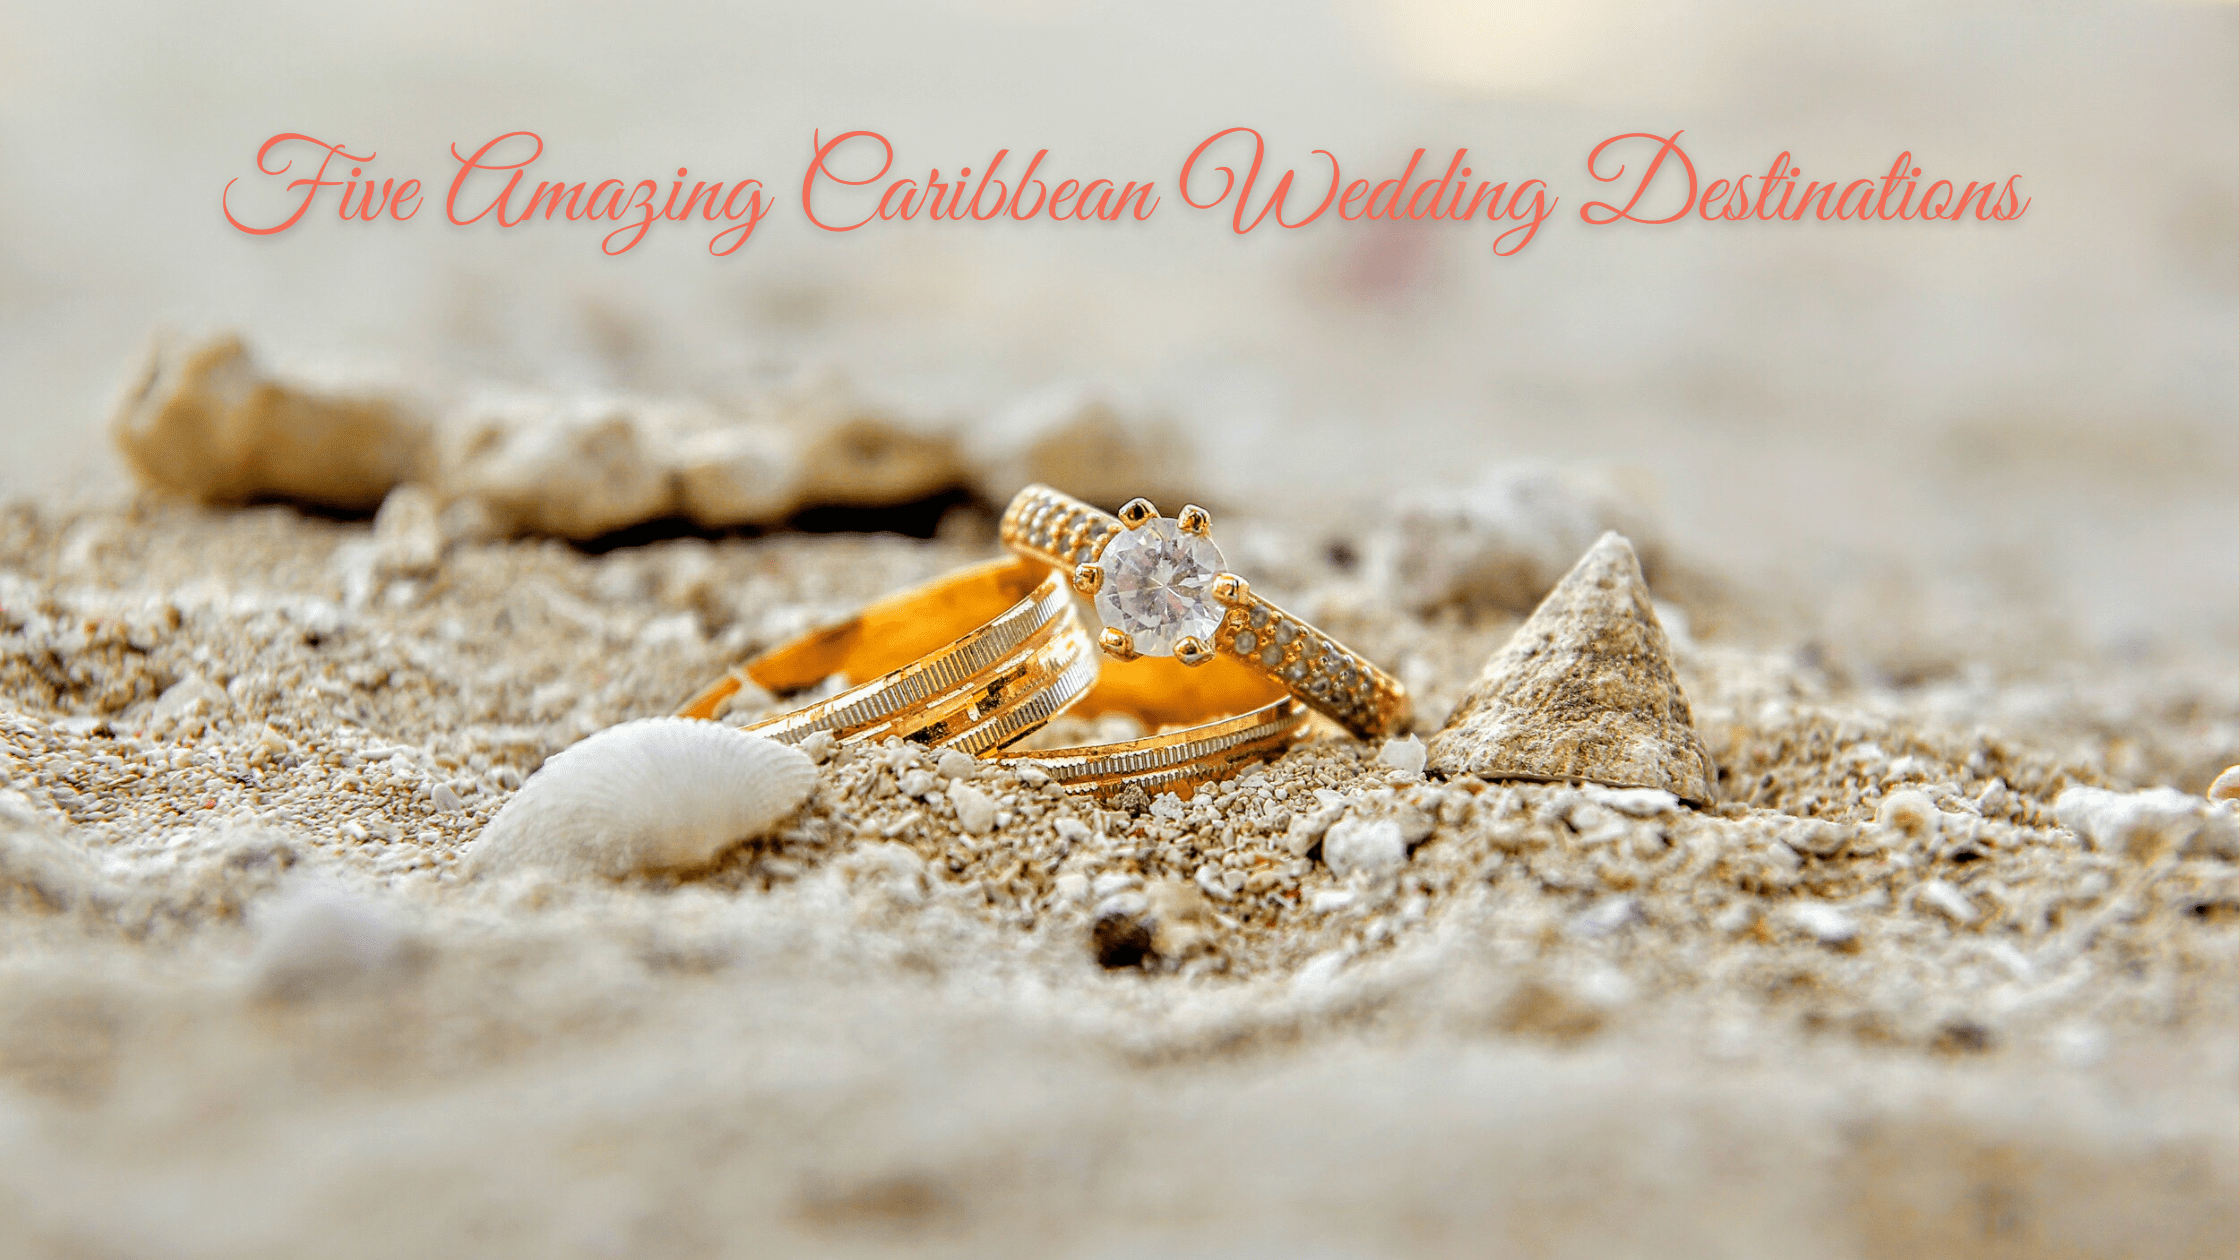 Five Amazing Caribbean Wedding Destinations